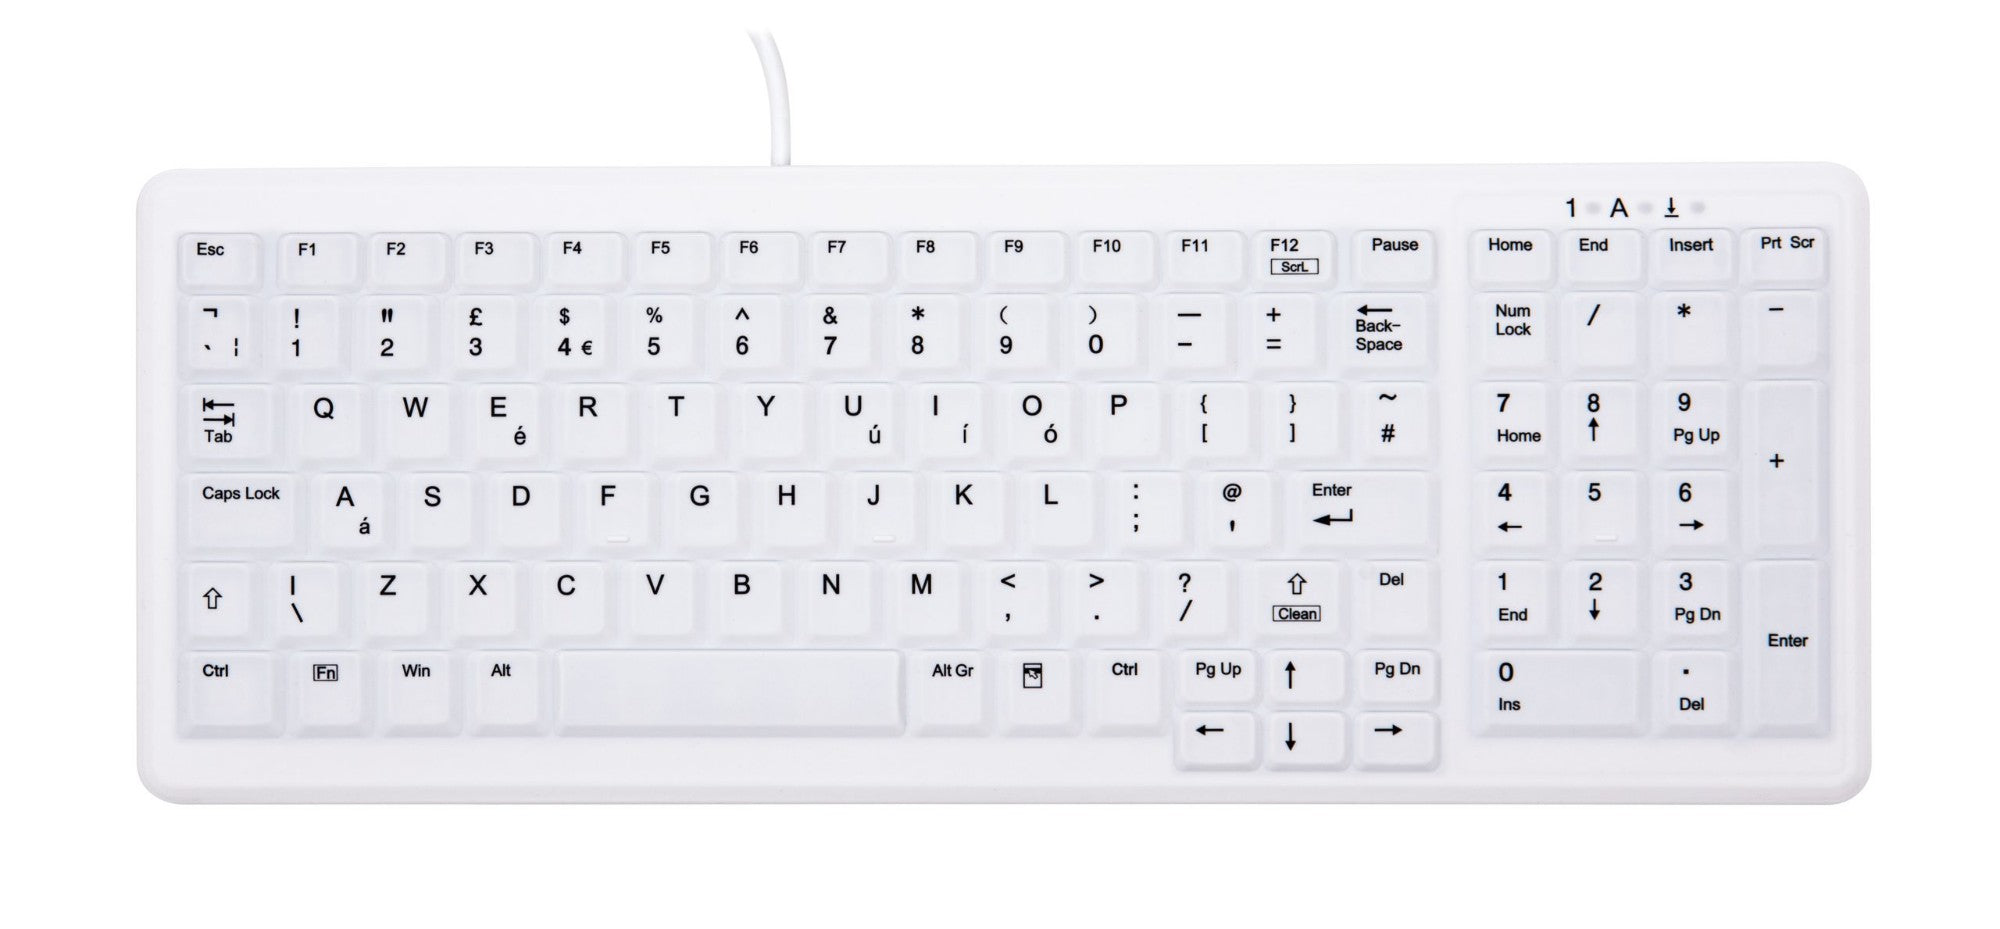 CHERRY AK-C7000 keyboard USB QWERTY UK English White